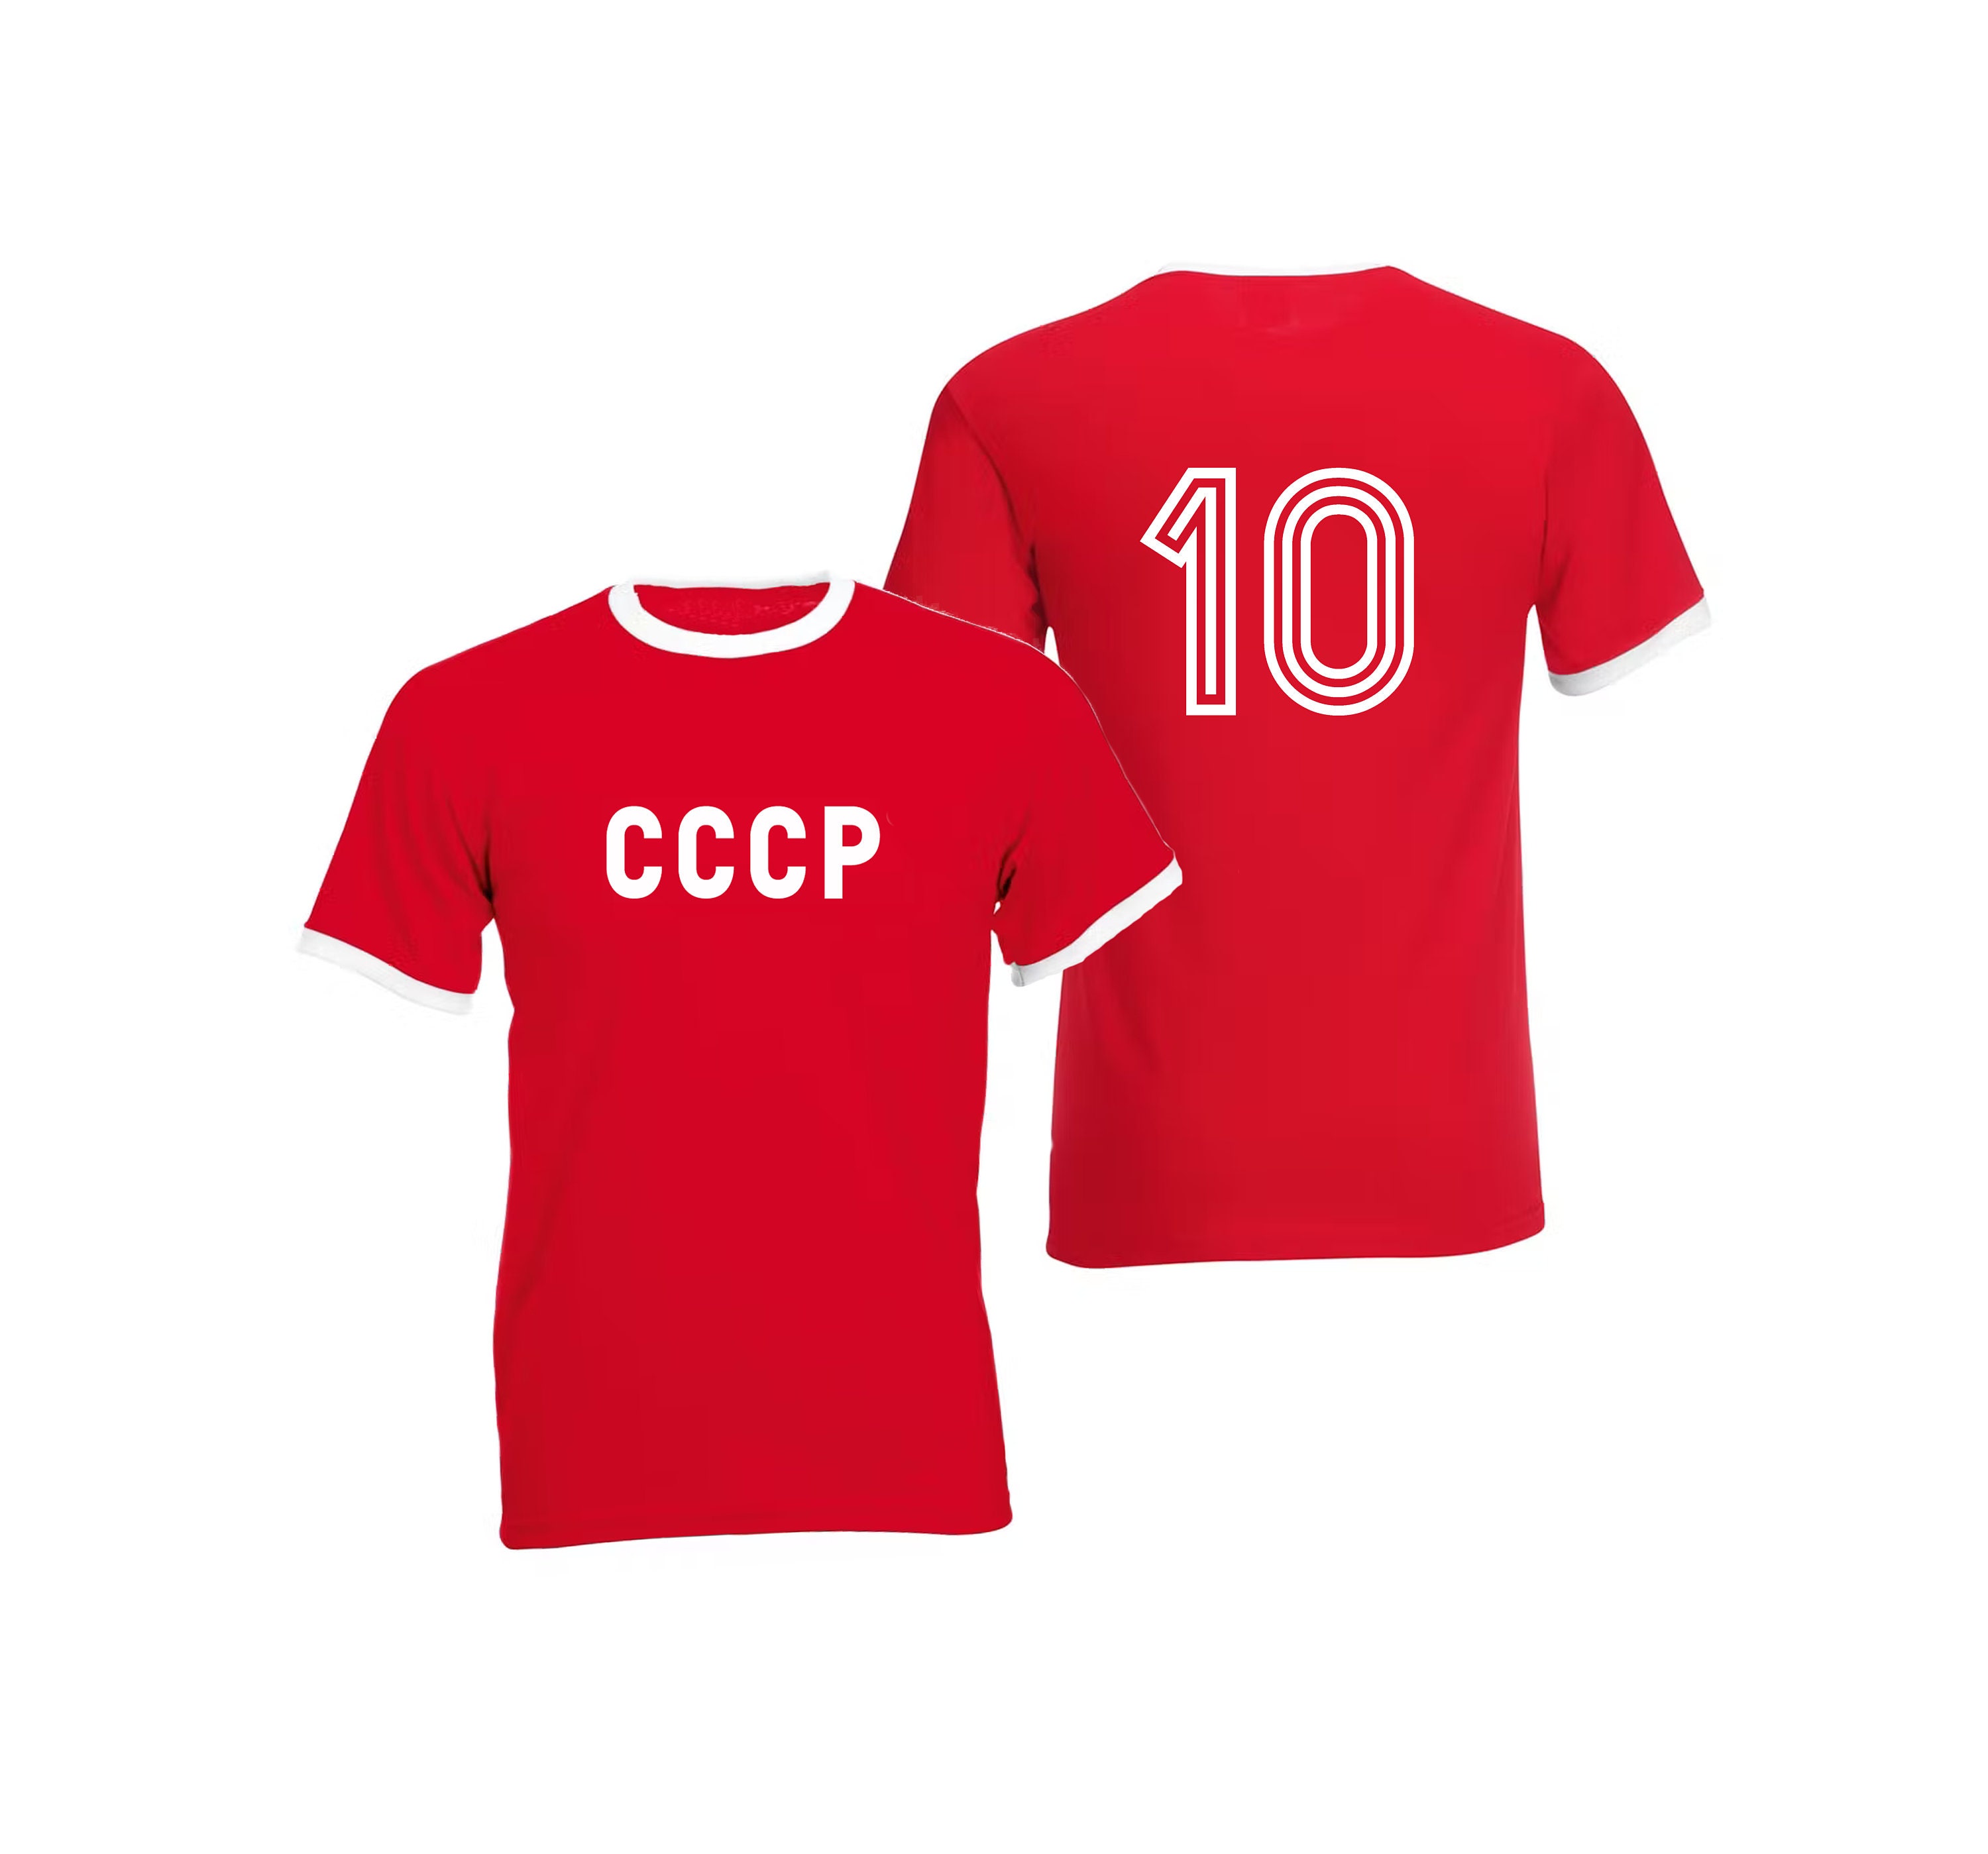 Trump 45 Team CCCP Soviet Russia Hockey Jerseys Red Top Sewn 